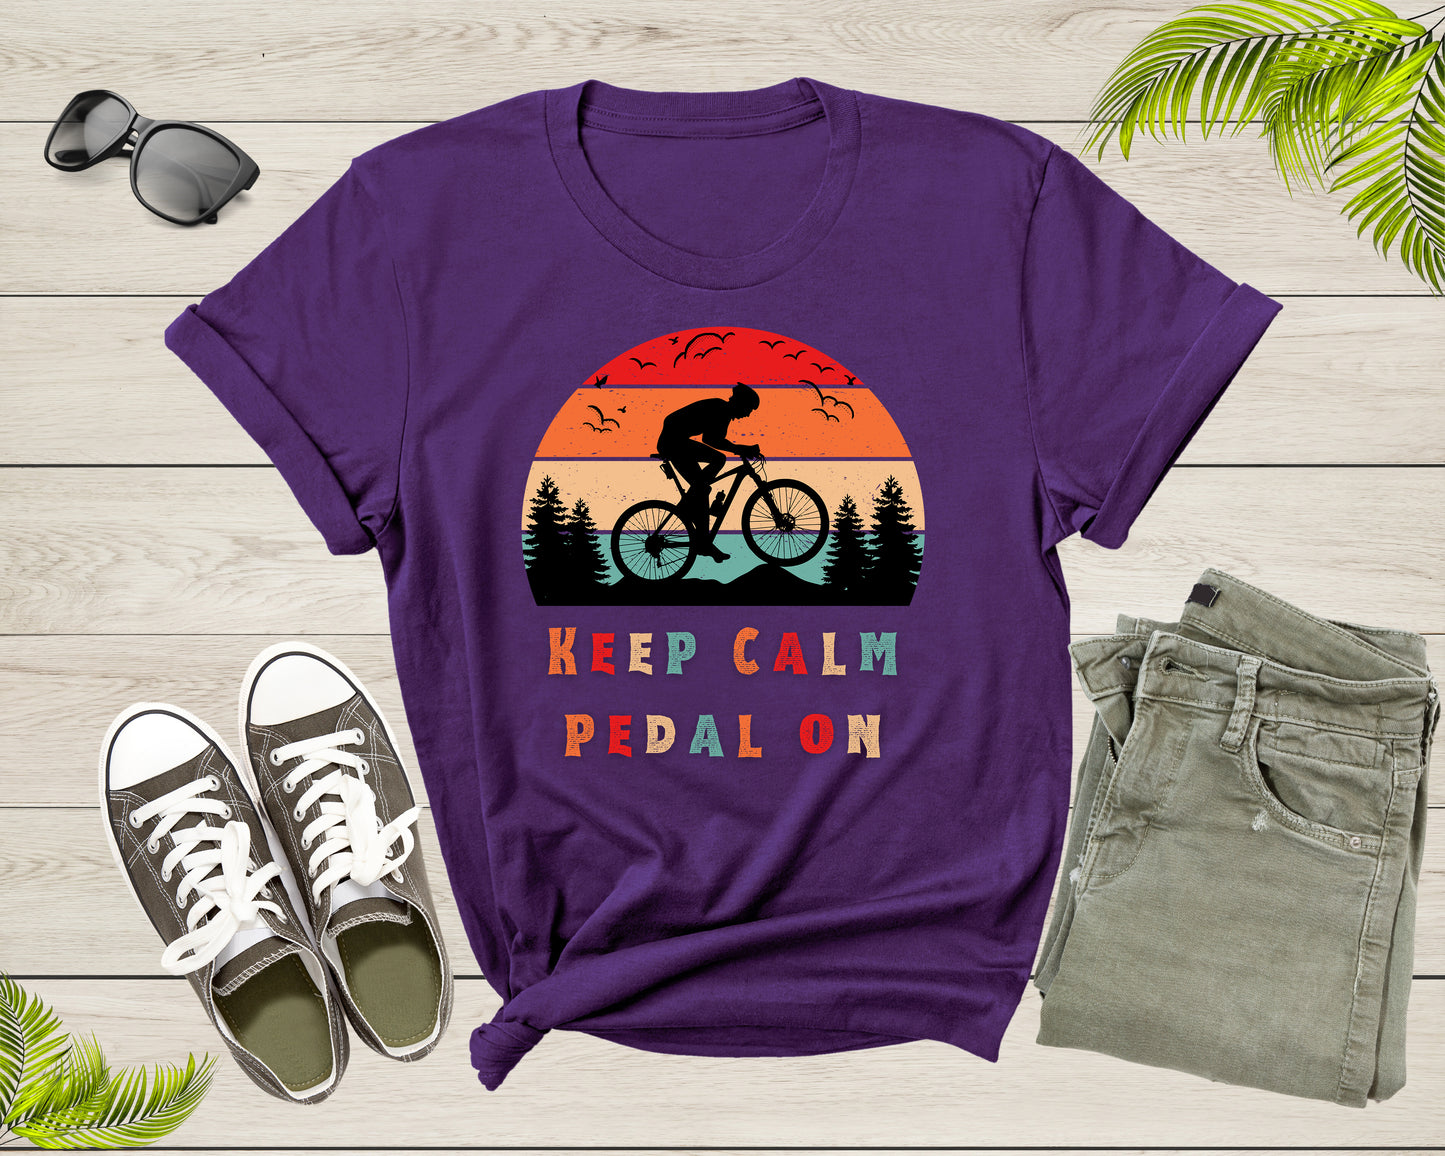 Mountain Bike Bicycle Lover Gift Idea Shirt Women Men Kids Boys Girls Bicycle Themed Tshirt Bike Lover Birthday Present Dad Mom T-shirt